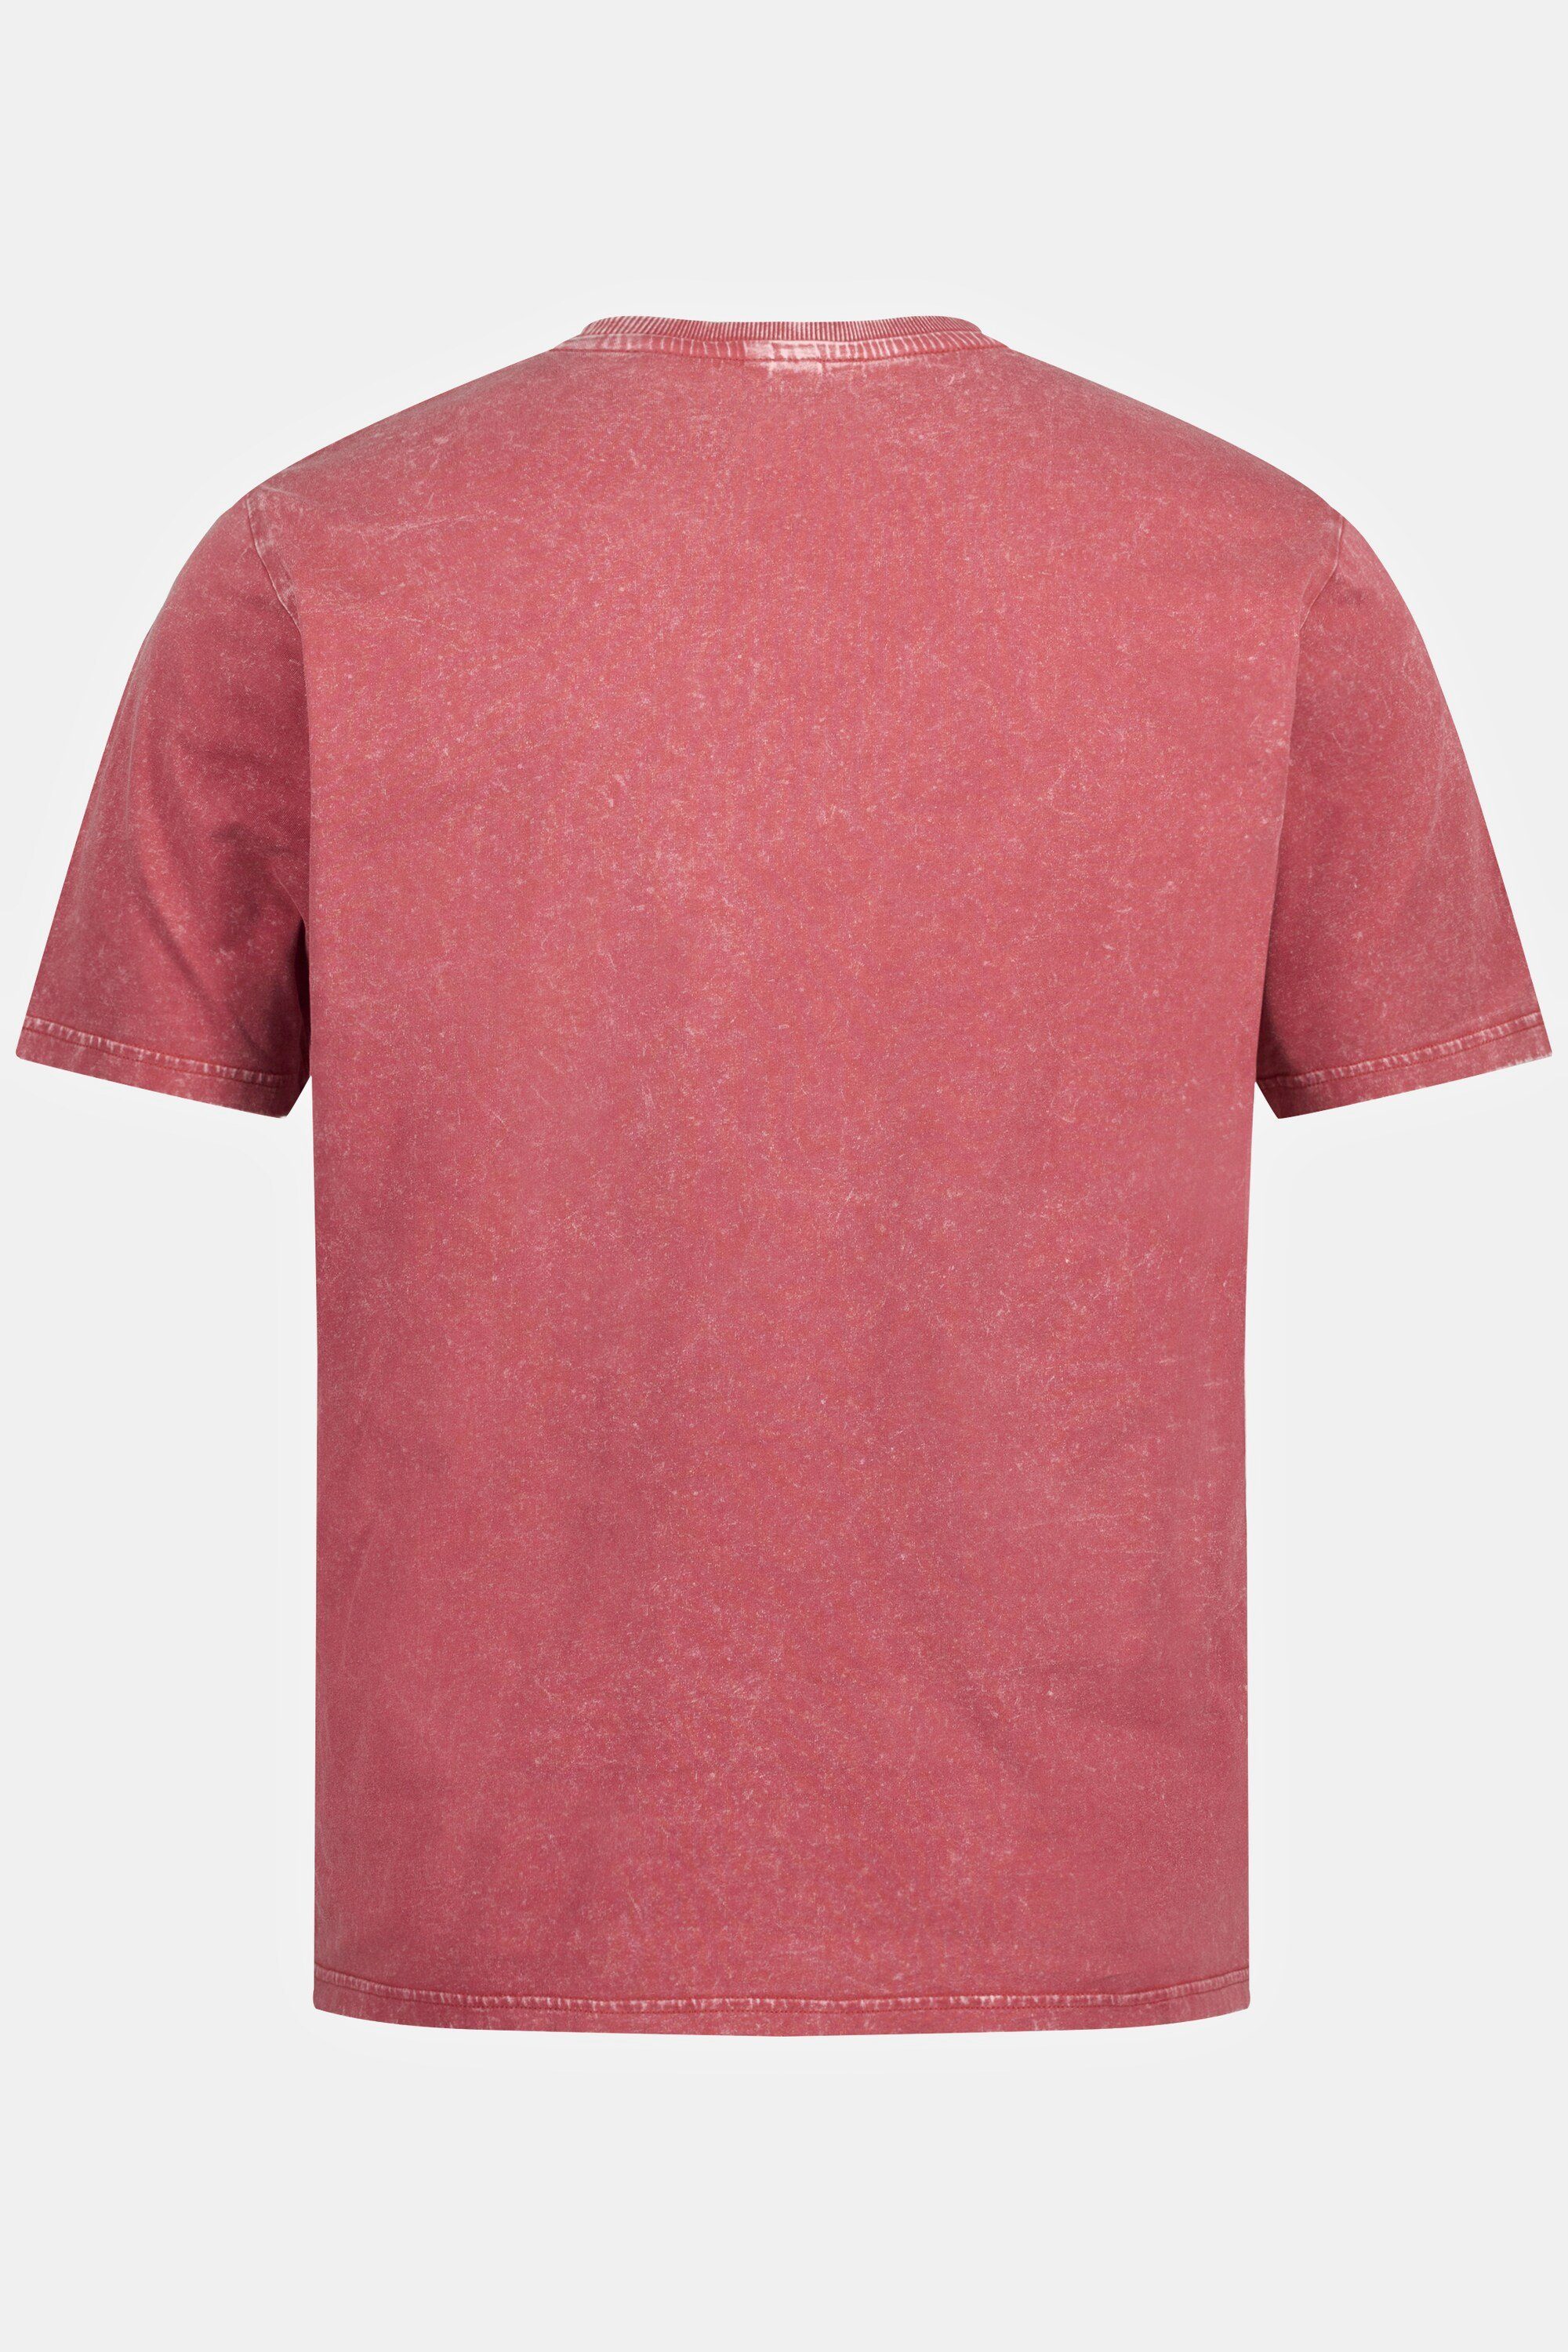 JP1880 T-Shirt T-Shirt Halbarm Print Rundhals rot